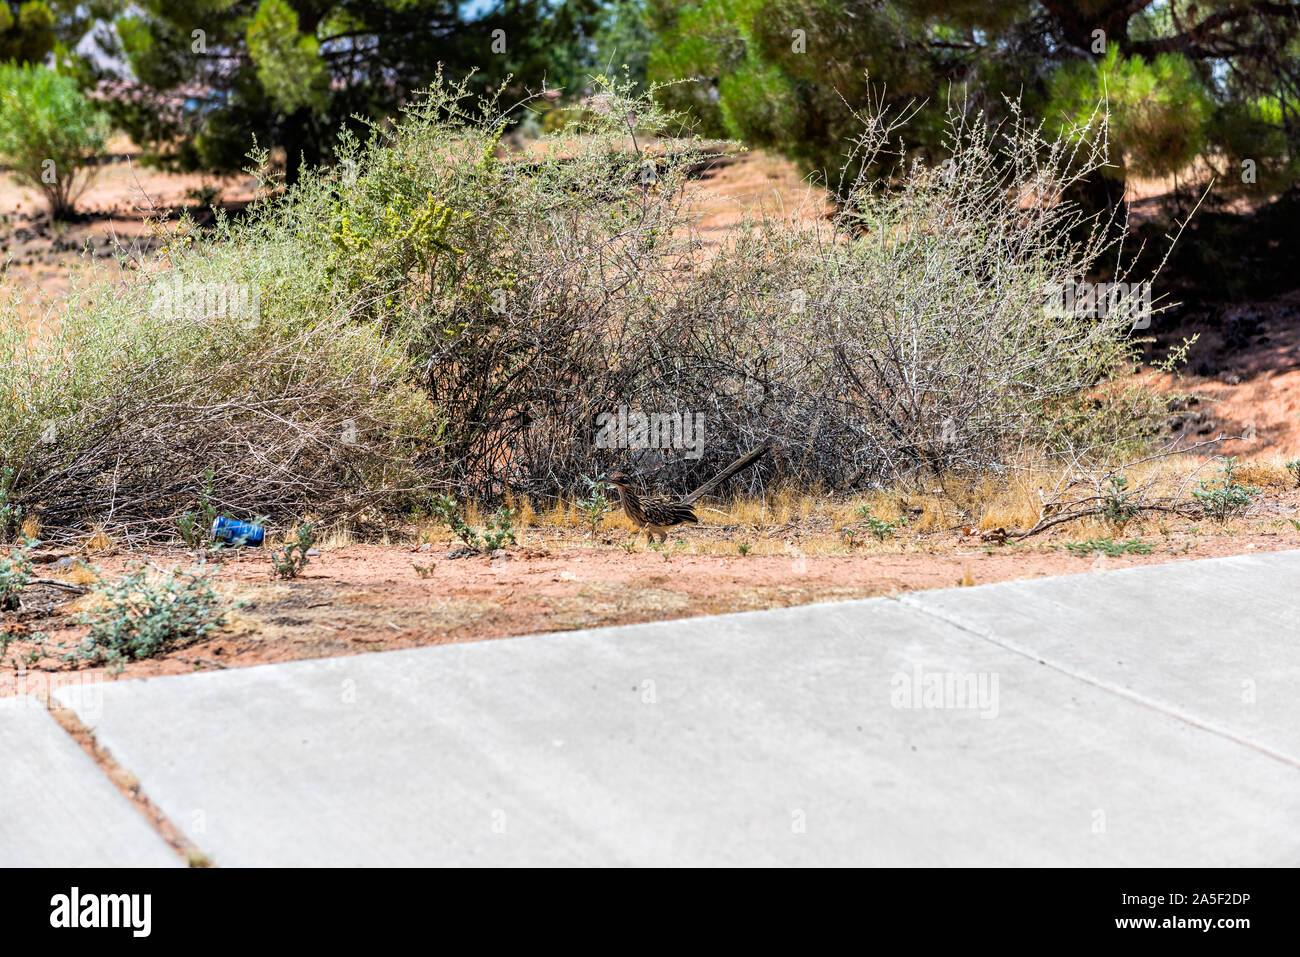 Roadrunner bird animal camouflaged in desert shrubs in Kanab, Utah with trash near sidewalk road Stock Photo